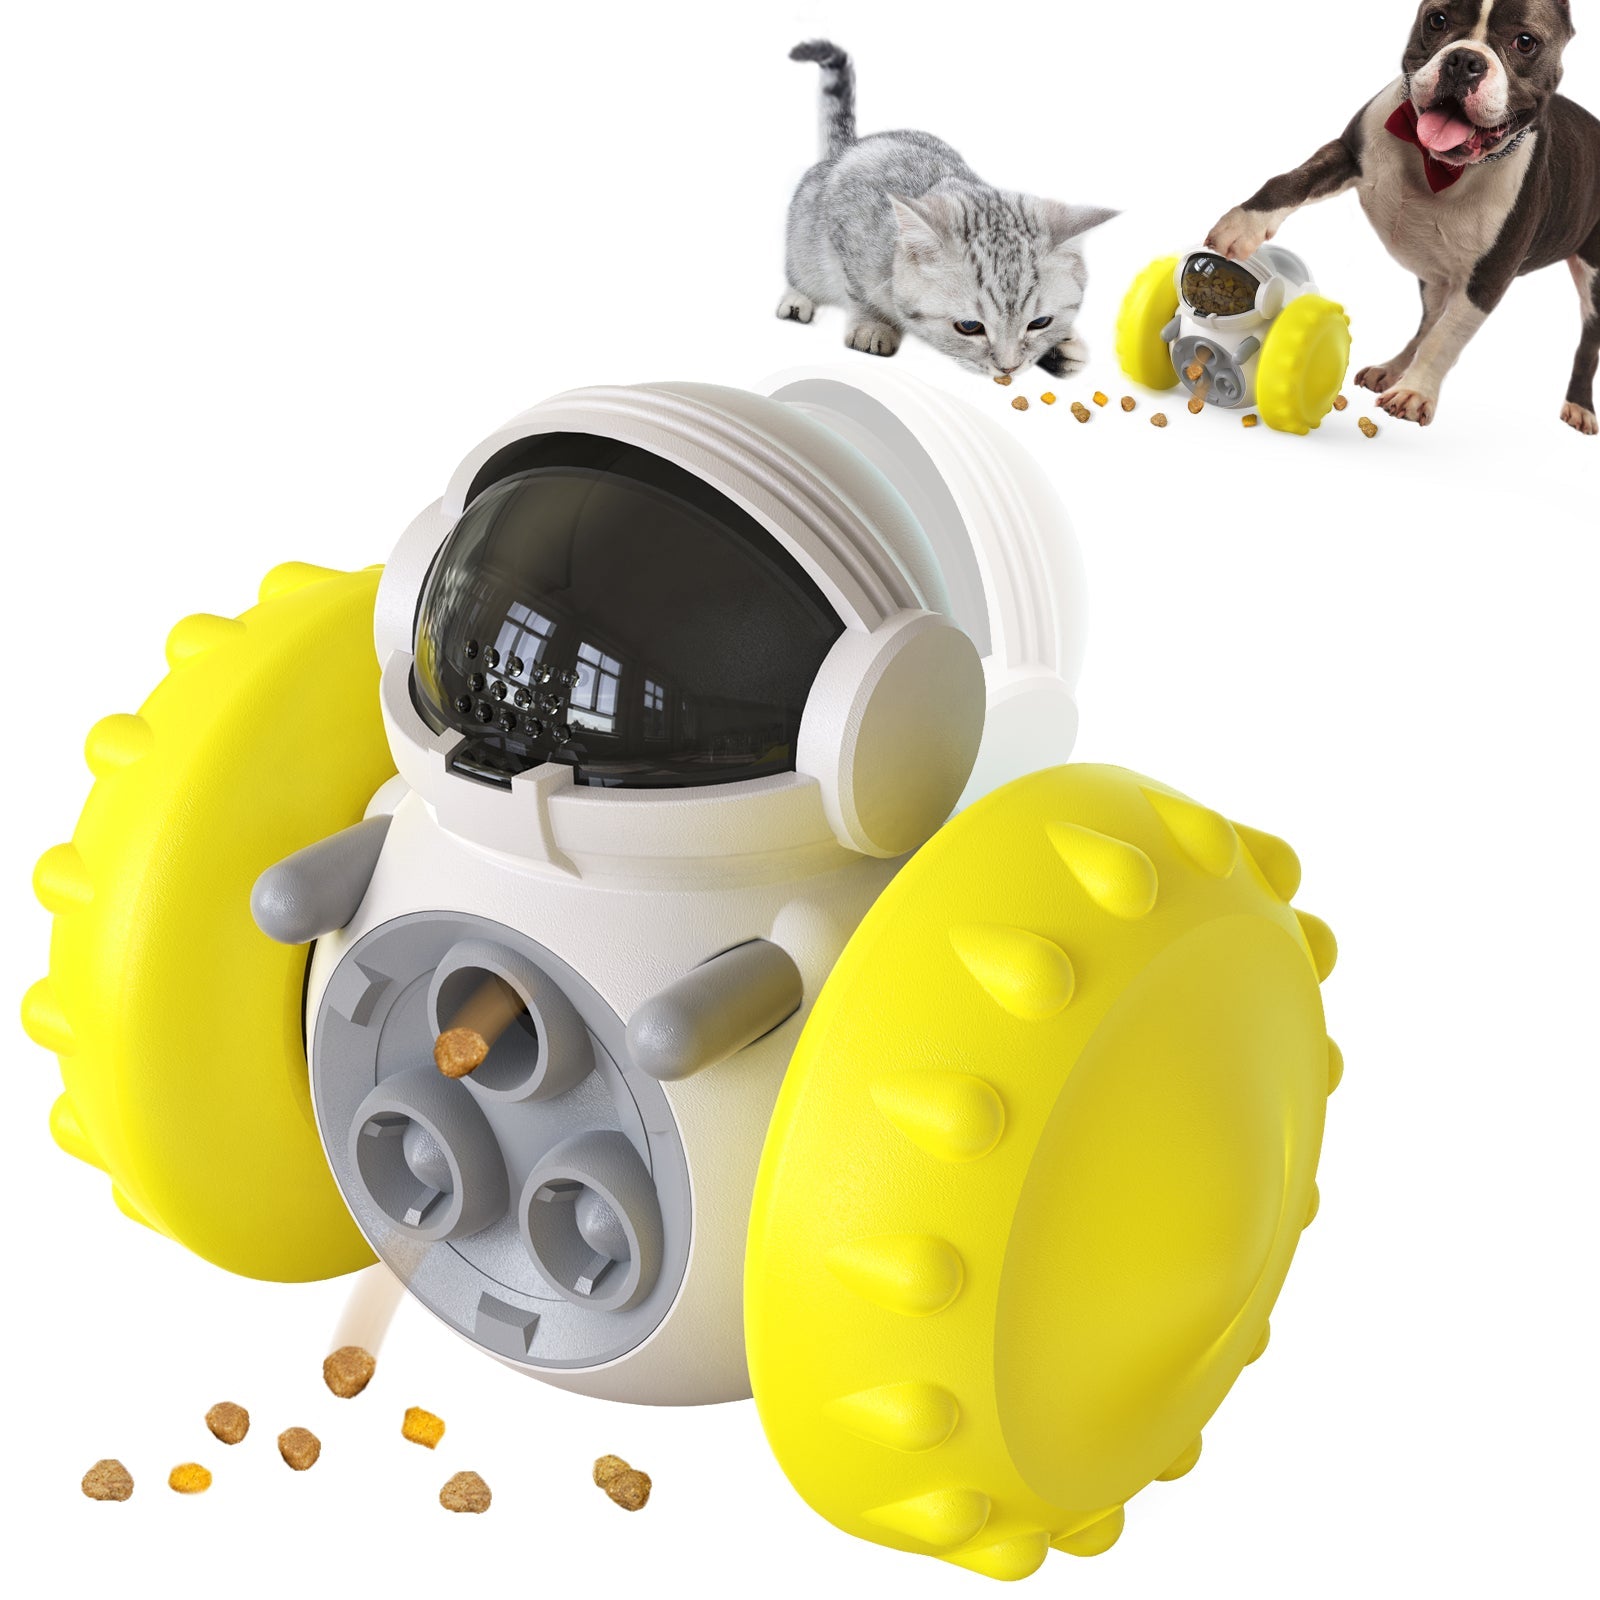 Dog Slow Feeder Bowl Chew Toys Training Tool Interactive Toy Dog